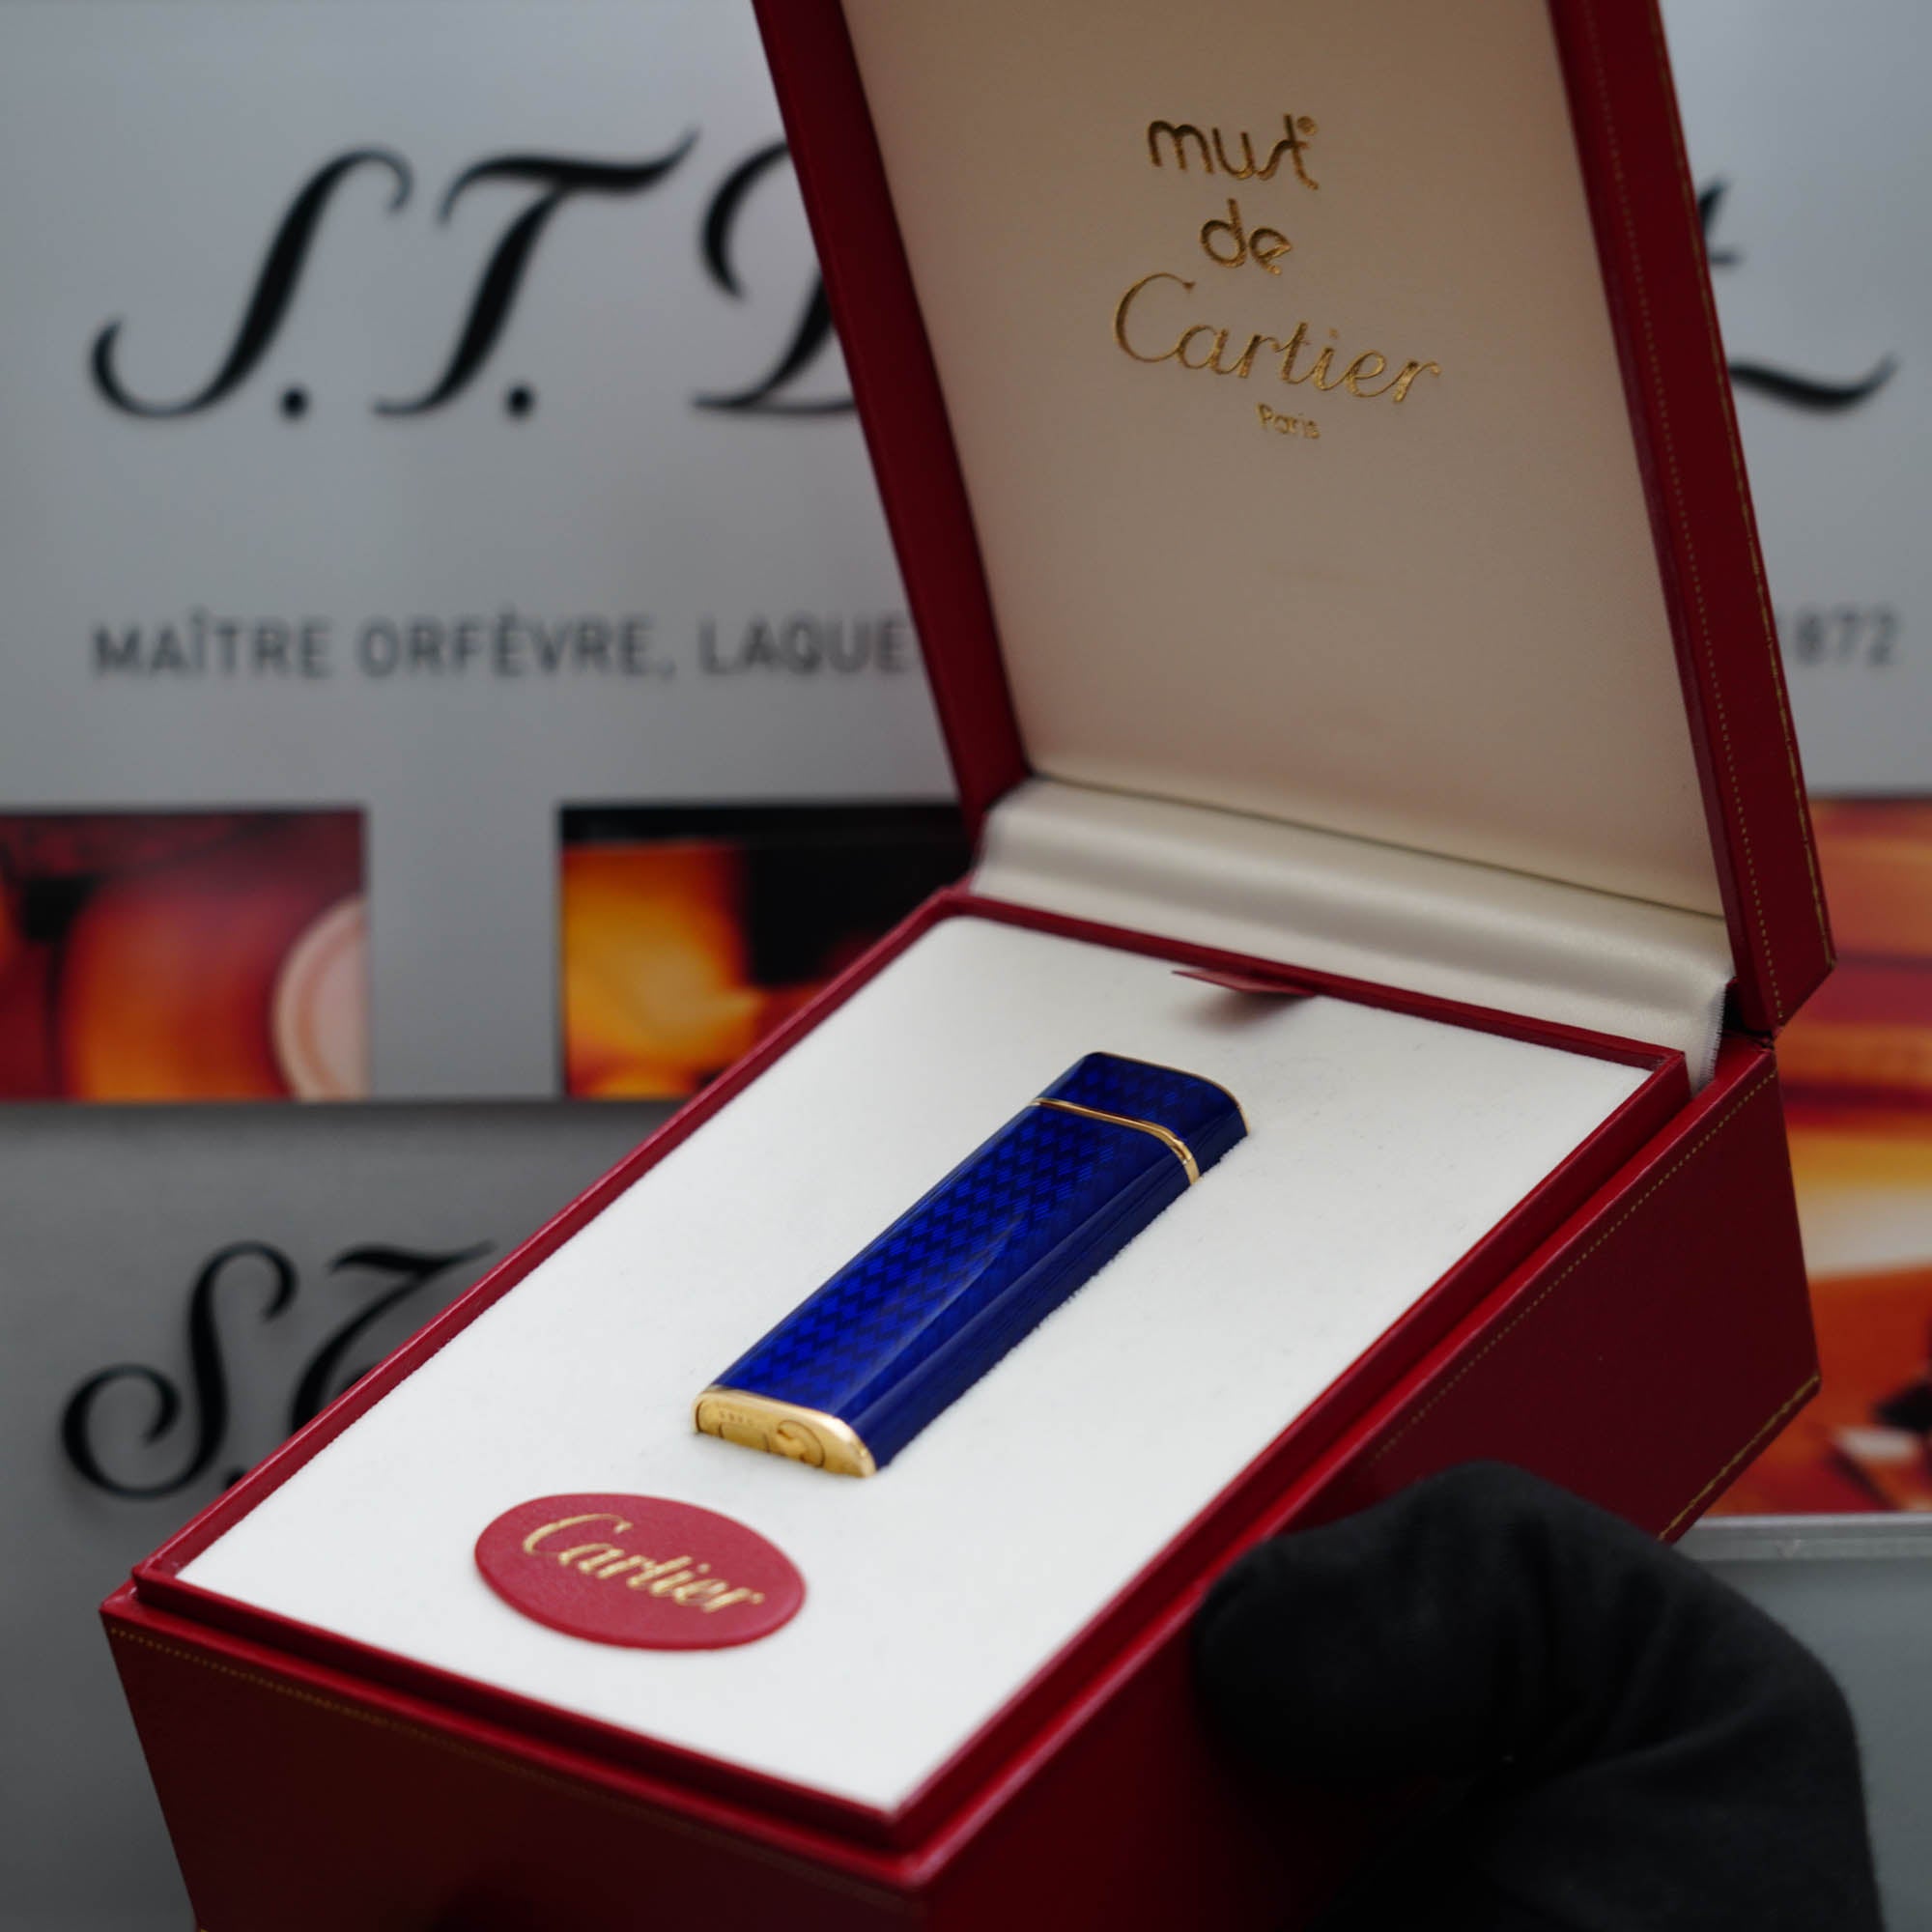 Vintage 1970s Cartier Solid 18k Gold Blue Smalto Extremly rare Lighter